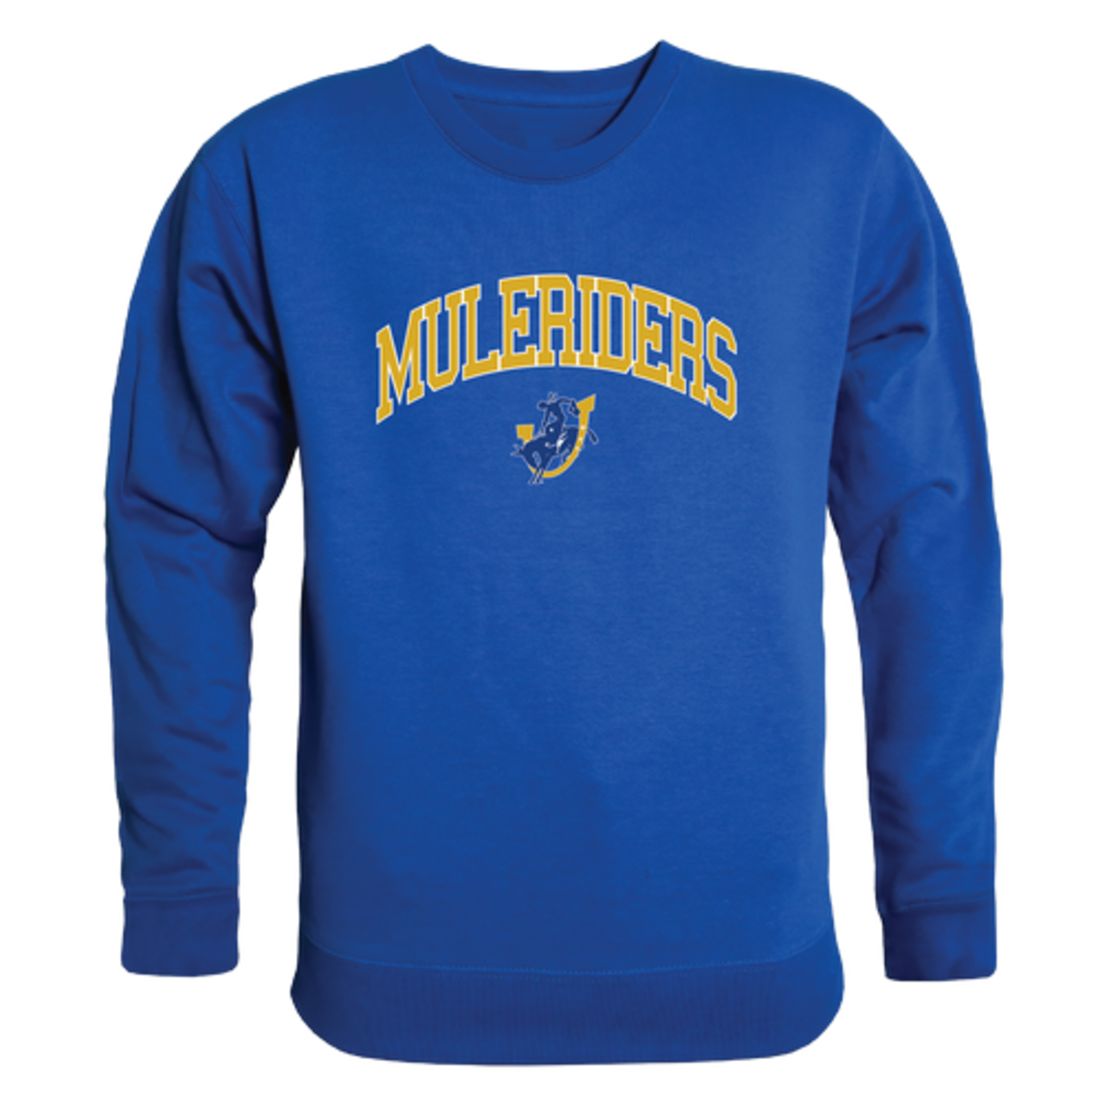 Southern-Arkansas-University-Muleriders-Campus-Fleece-Crewneck-Pullover-Sweatshirt